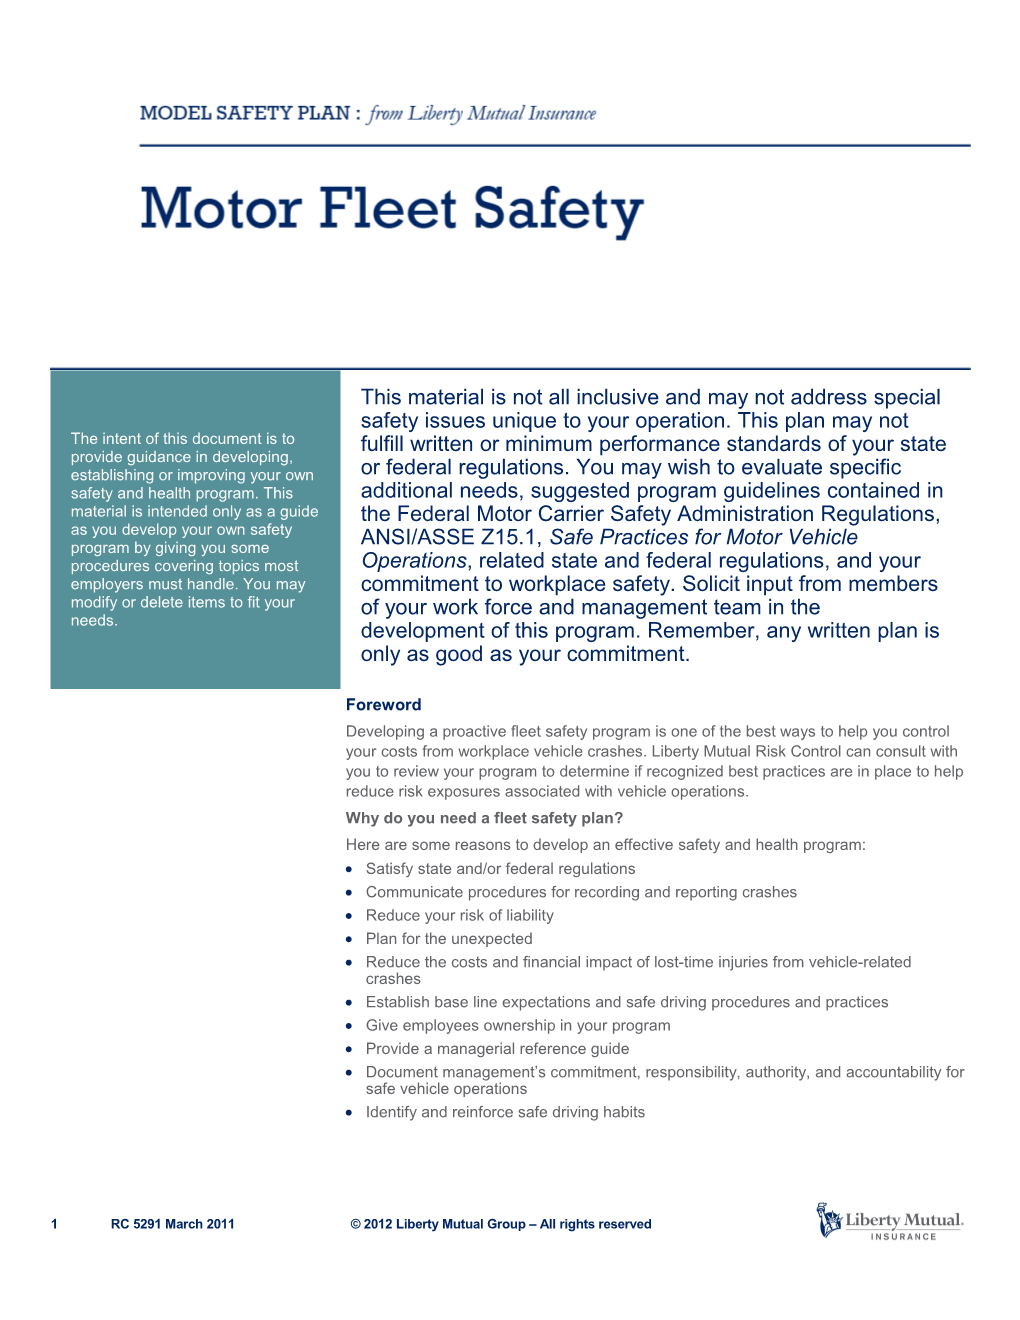 Model Safety Plan: Motor Fleet Safety, LC 5291